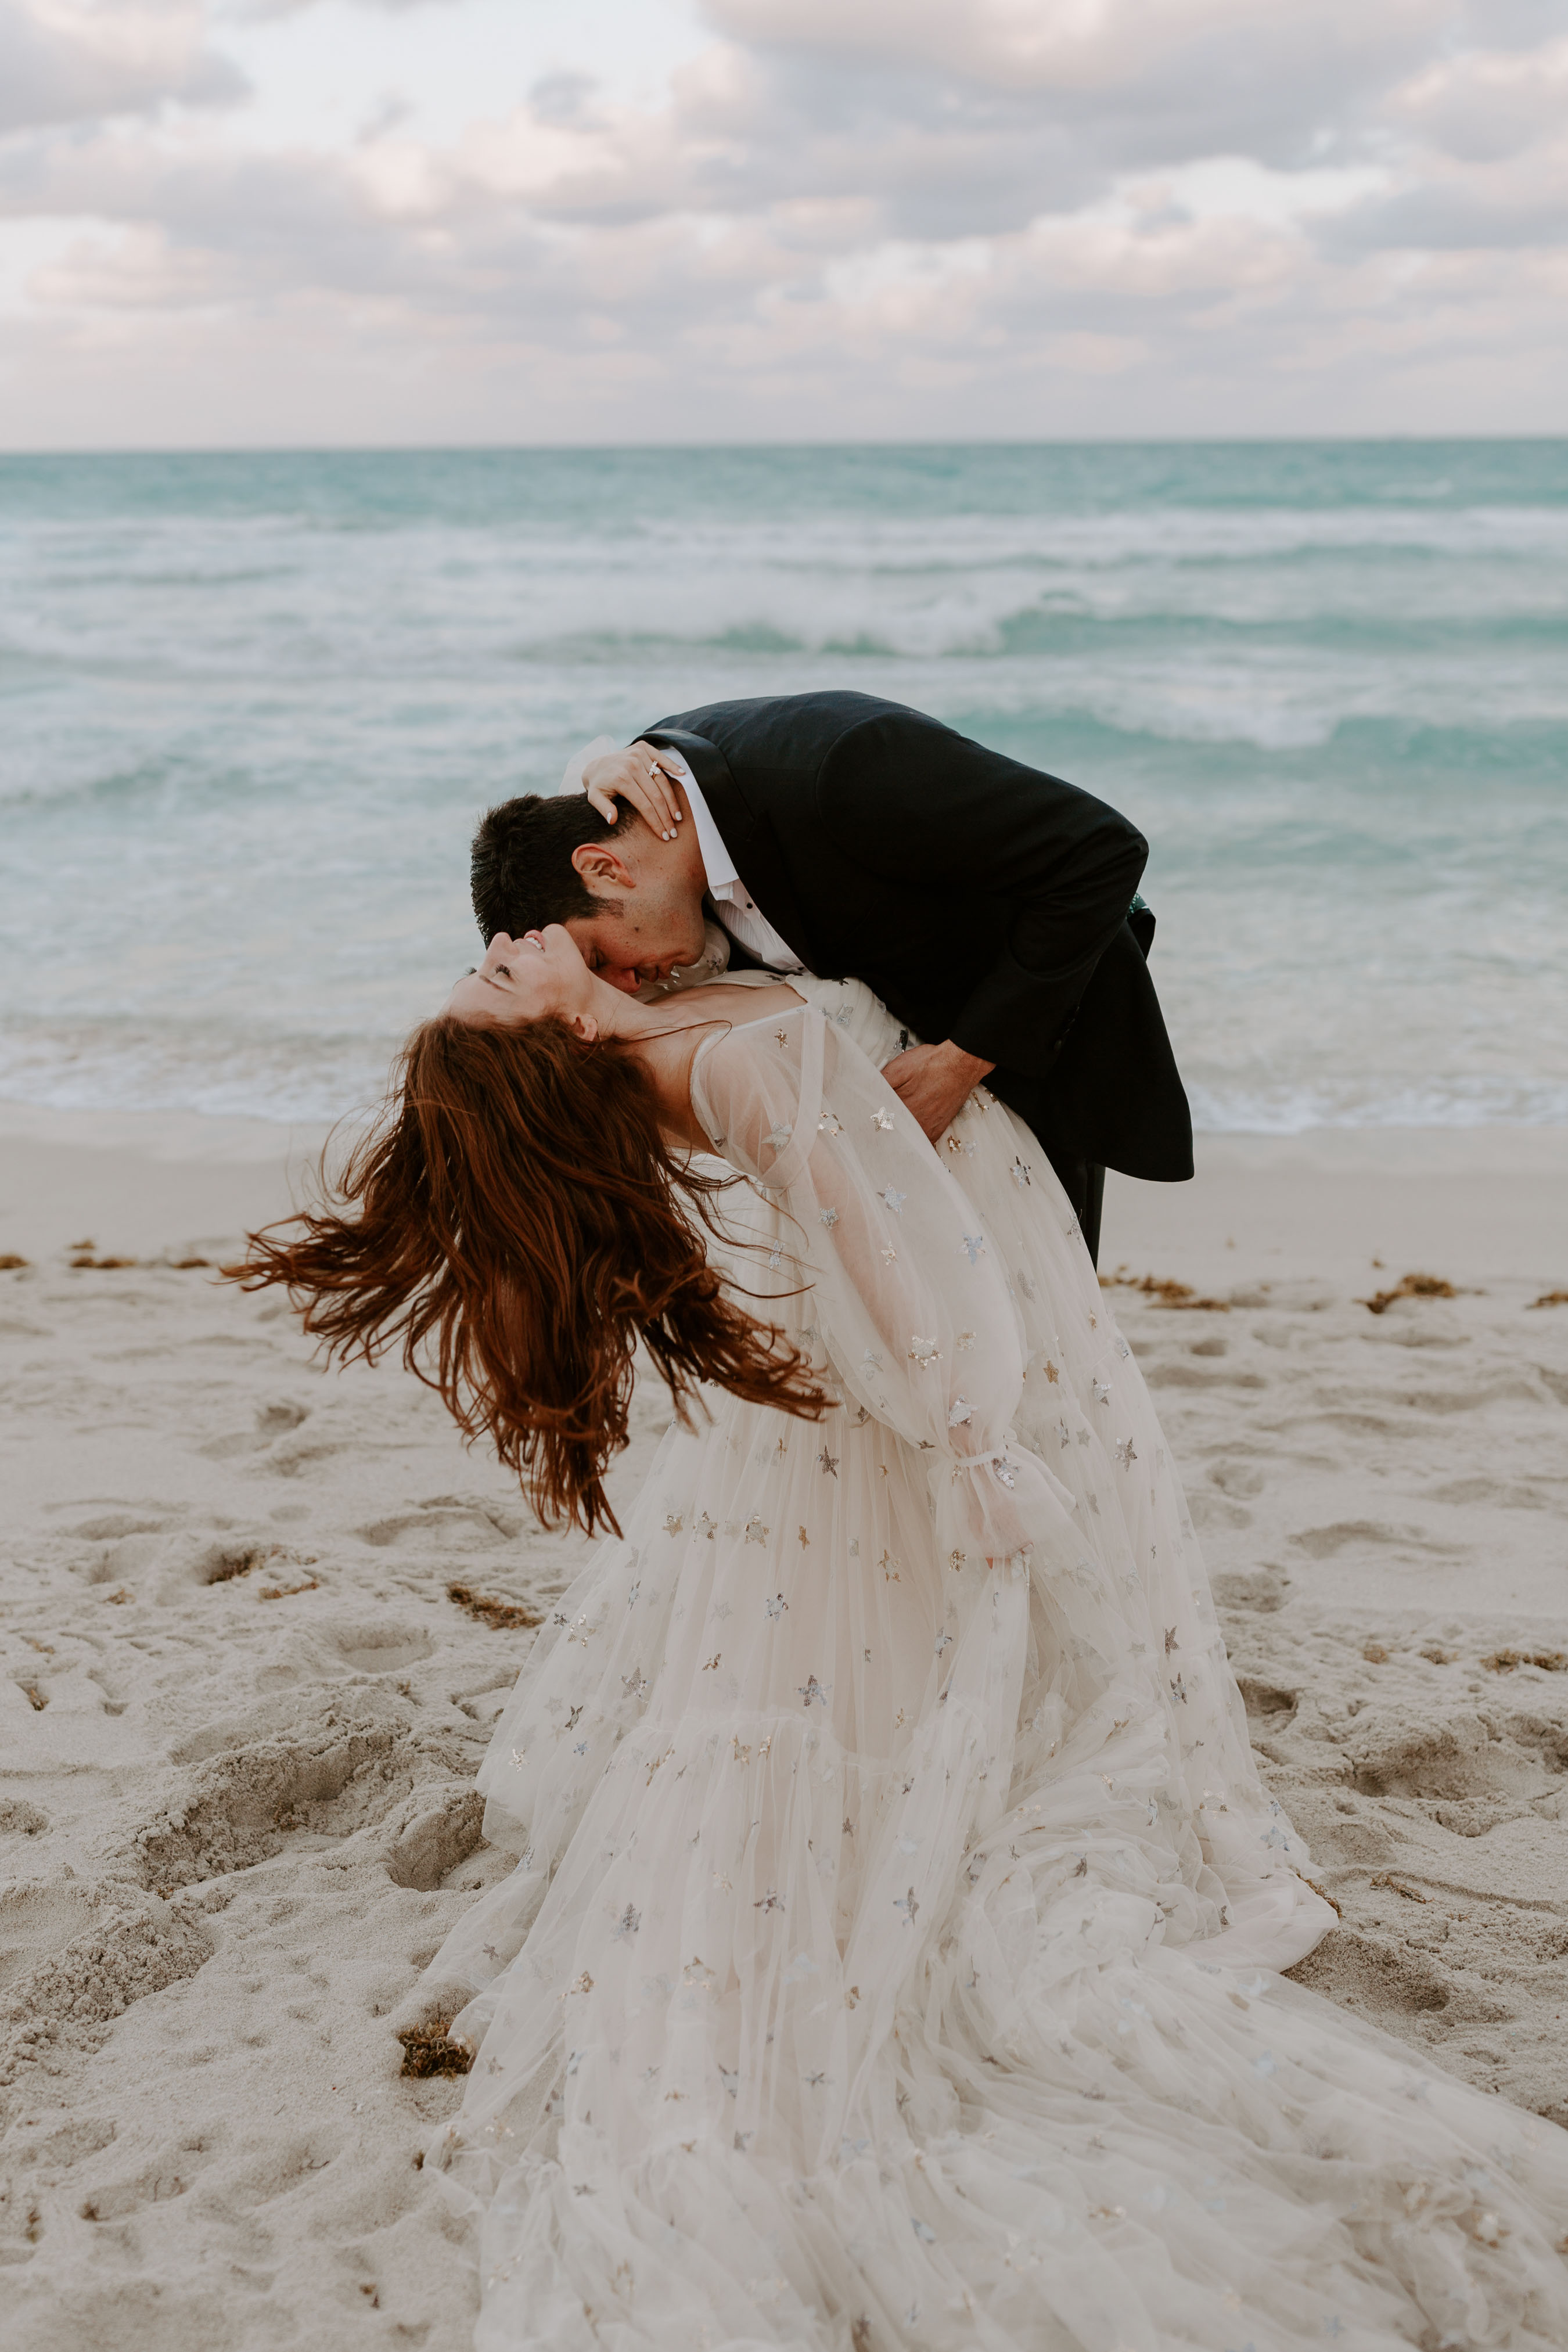 Dramatic poses for wedding photos on the beach